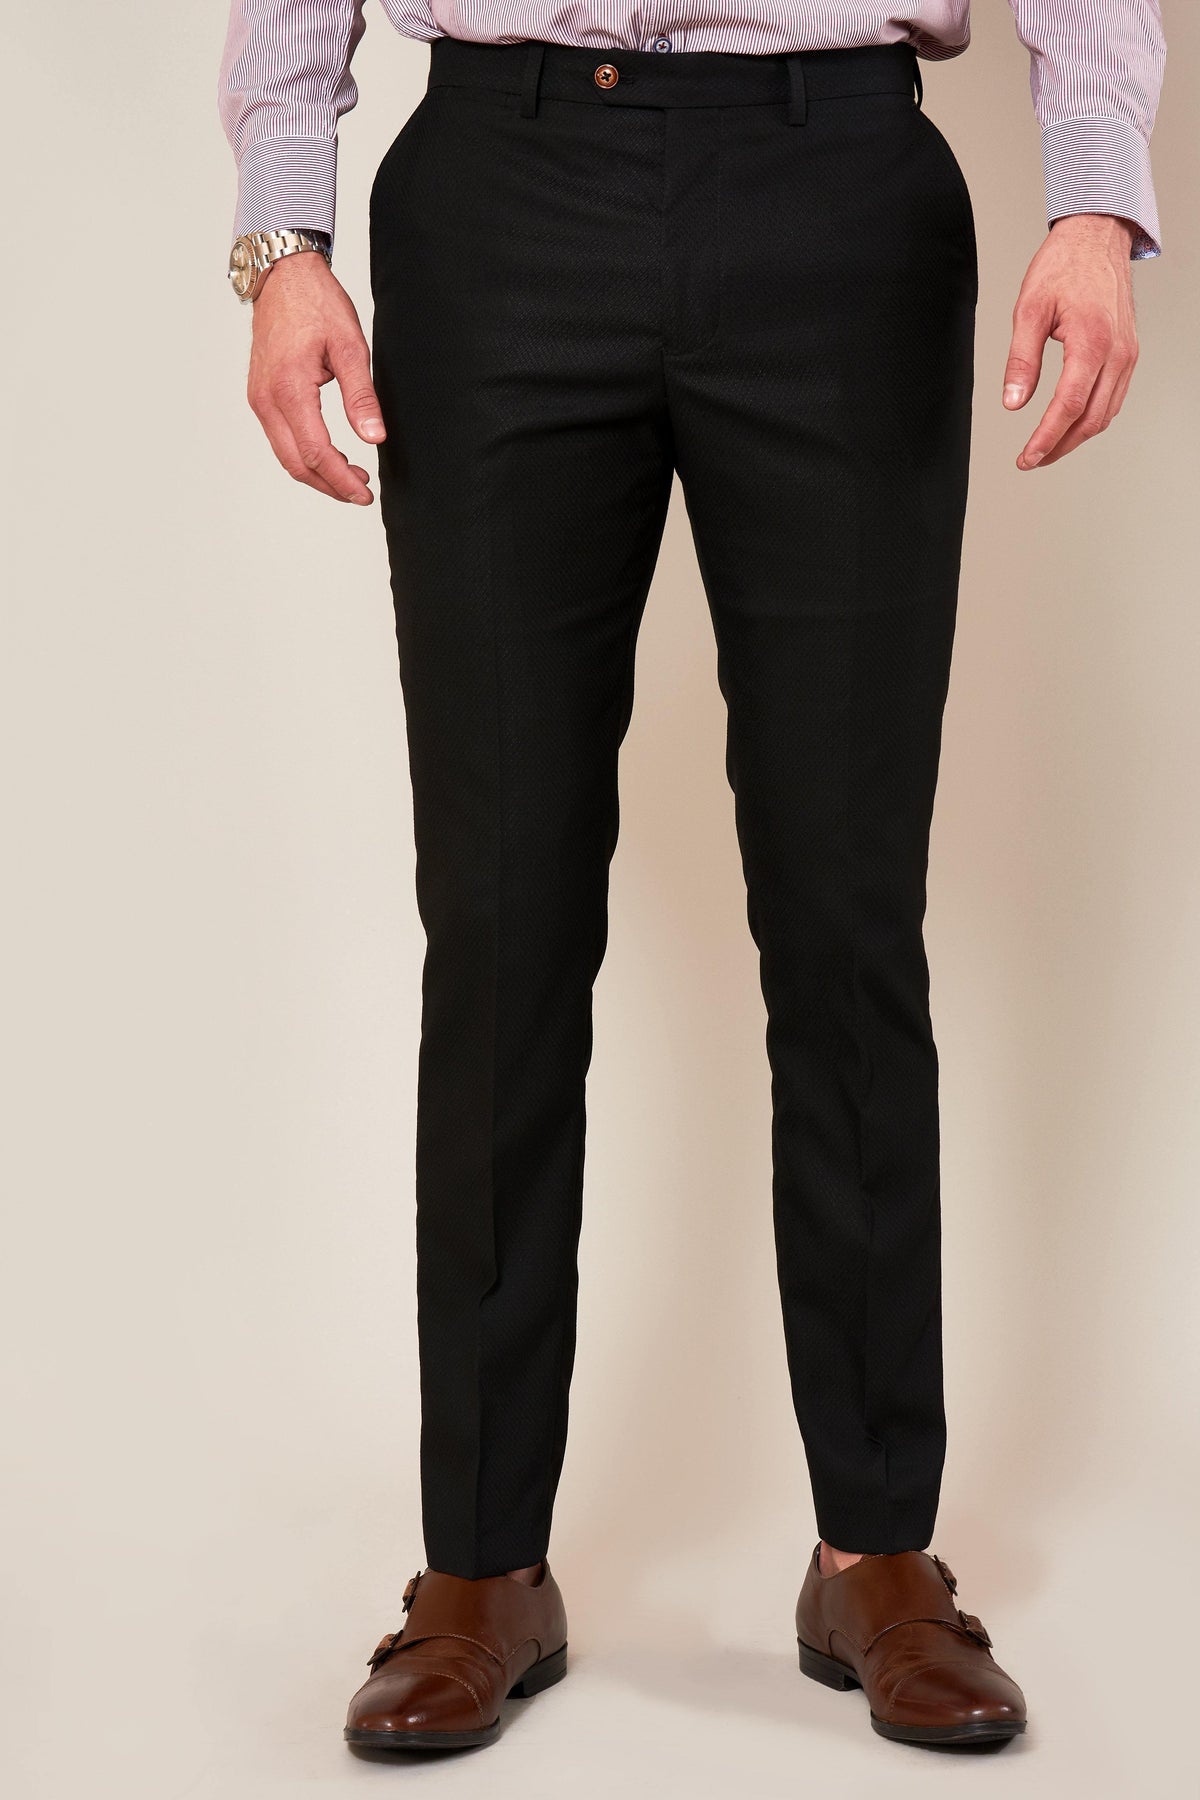 Limehaus | Men's Black Blue Check Skinny Trouser | Suit Direct